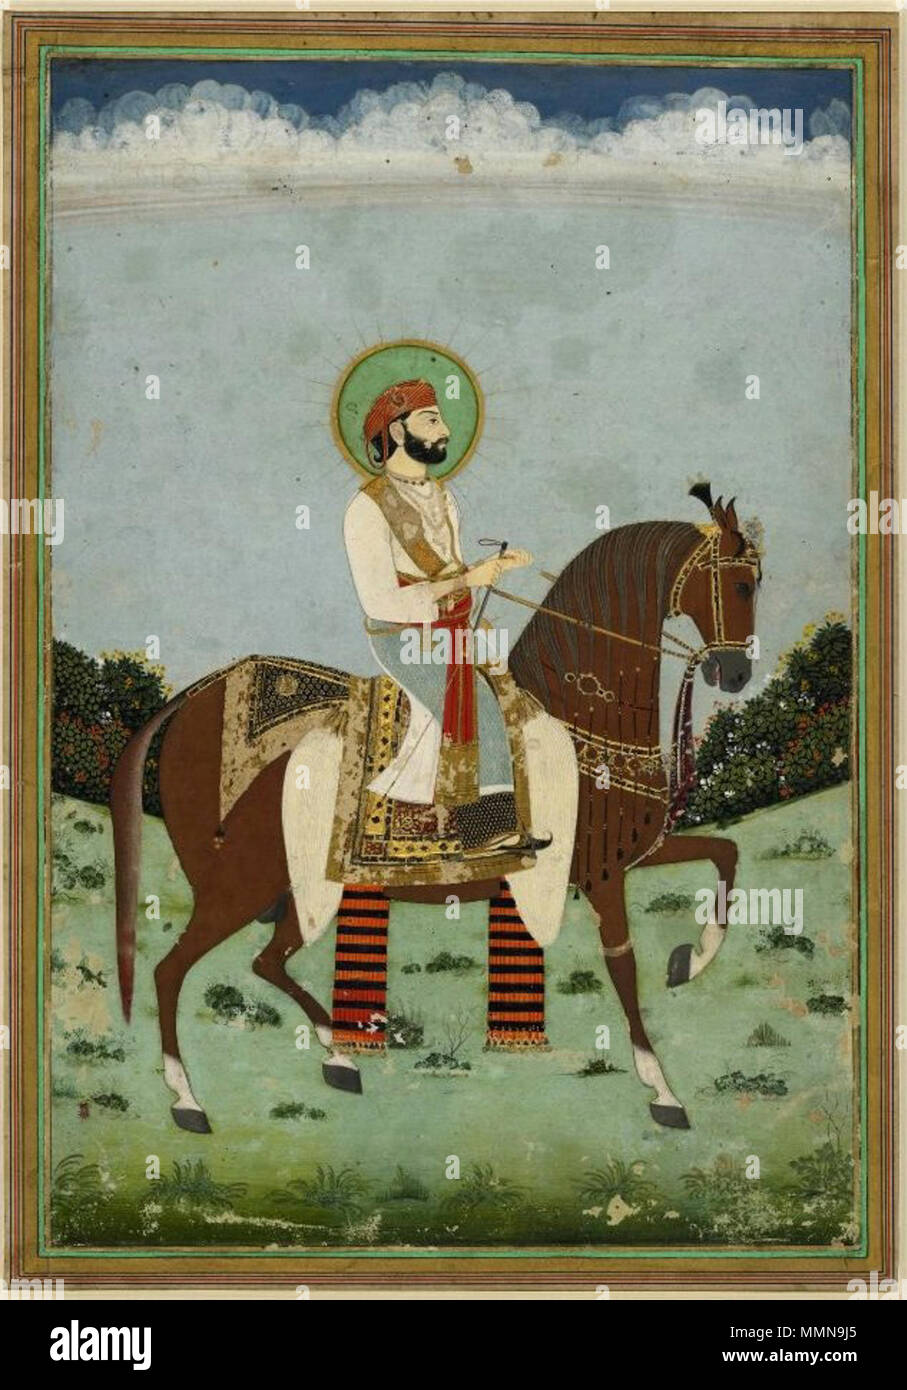 . Englisch: Maharaja Sawai Jai Singh II. ca 1725 Jaipur. British Museum. Vom 4. Dezember 2012, 21:24:04. ANONIMUS 1 Maharaja Sawai Jai Singh II ca 1725 Jaipur. British Museum Stockfoto